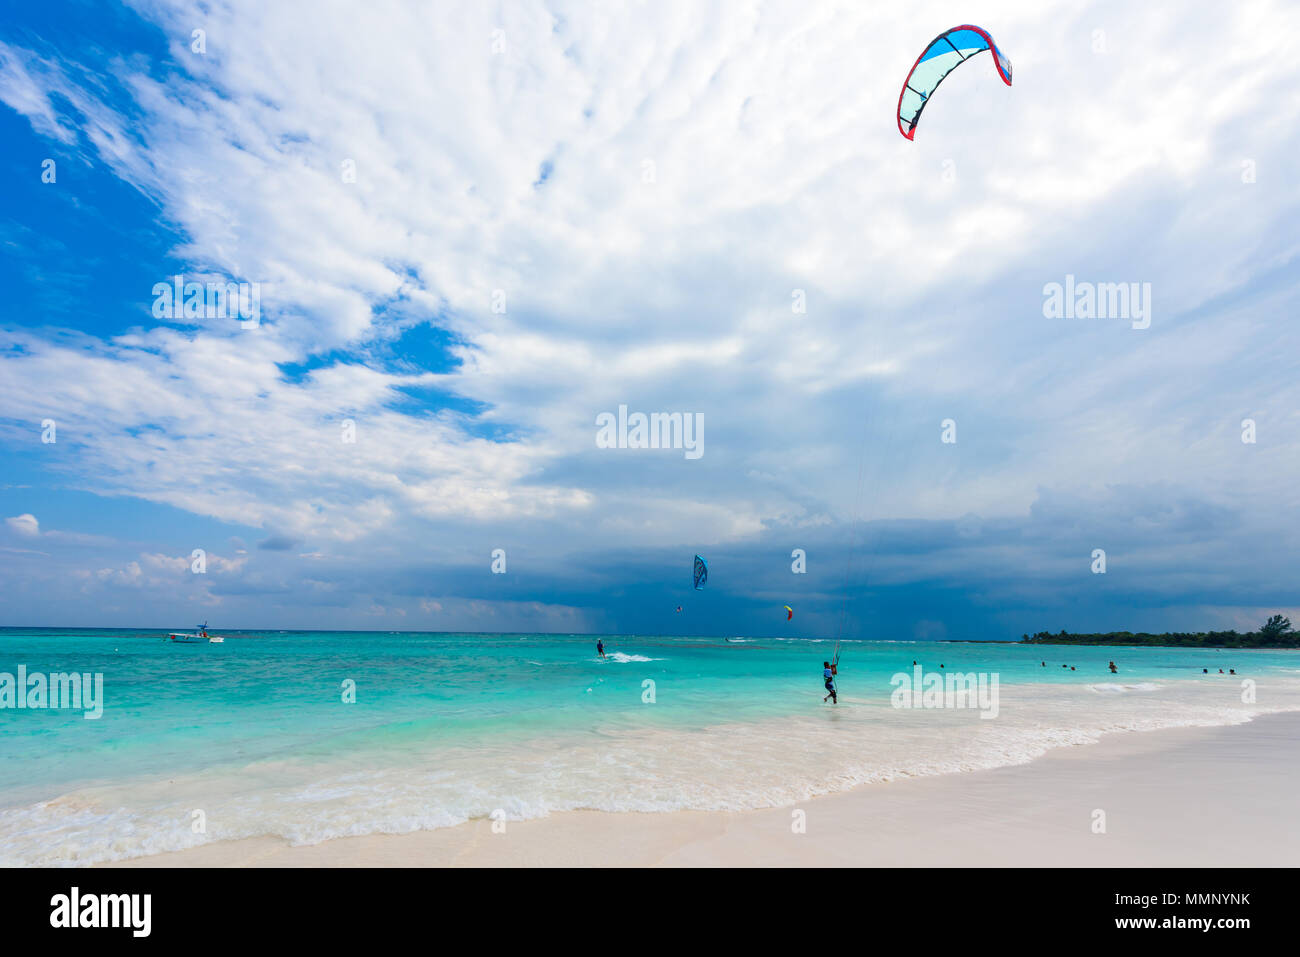 Kite surfing at paradise beach Stock Photo